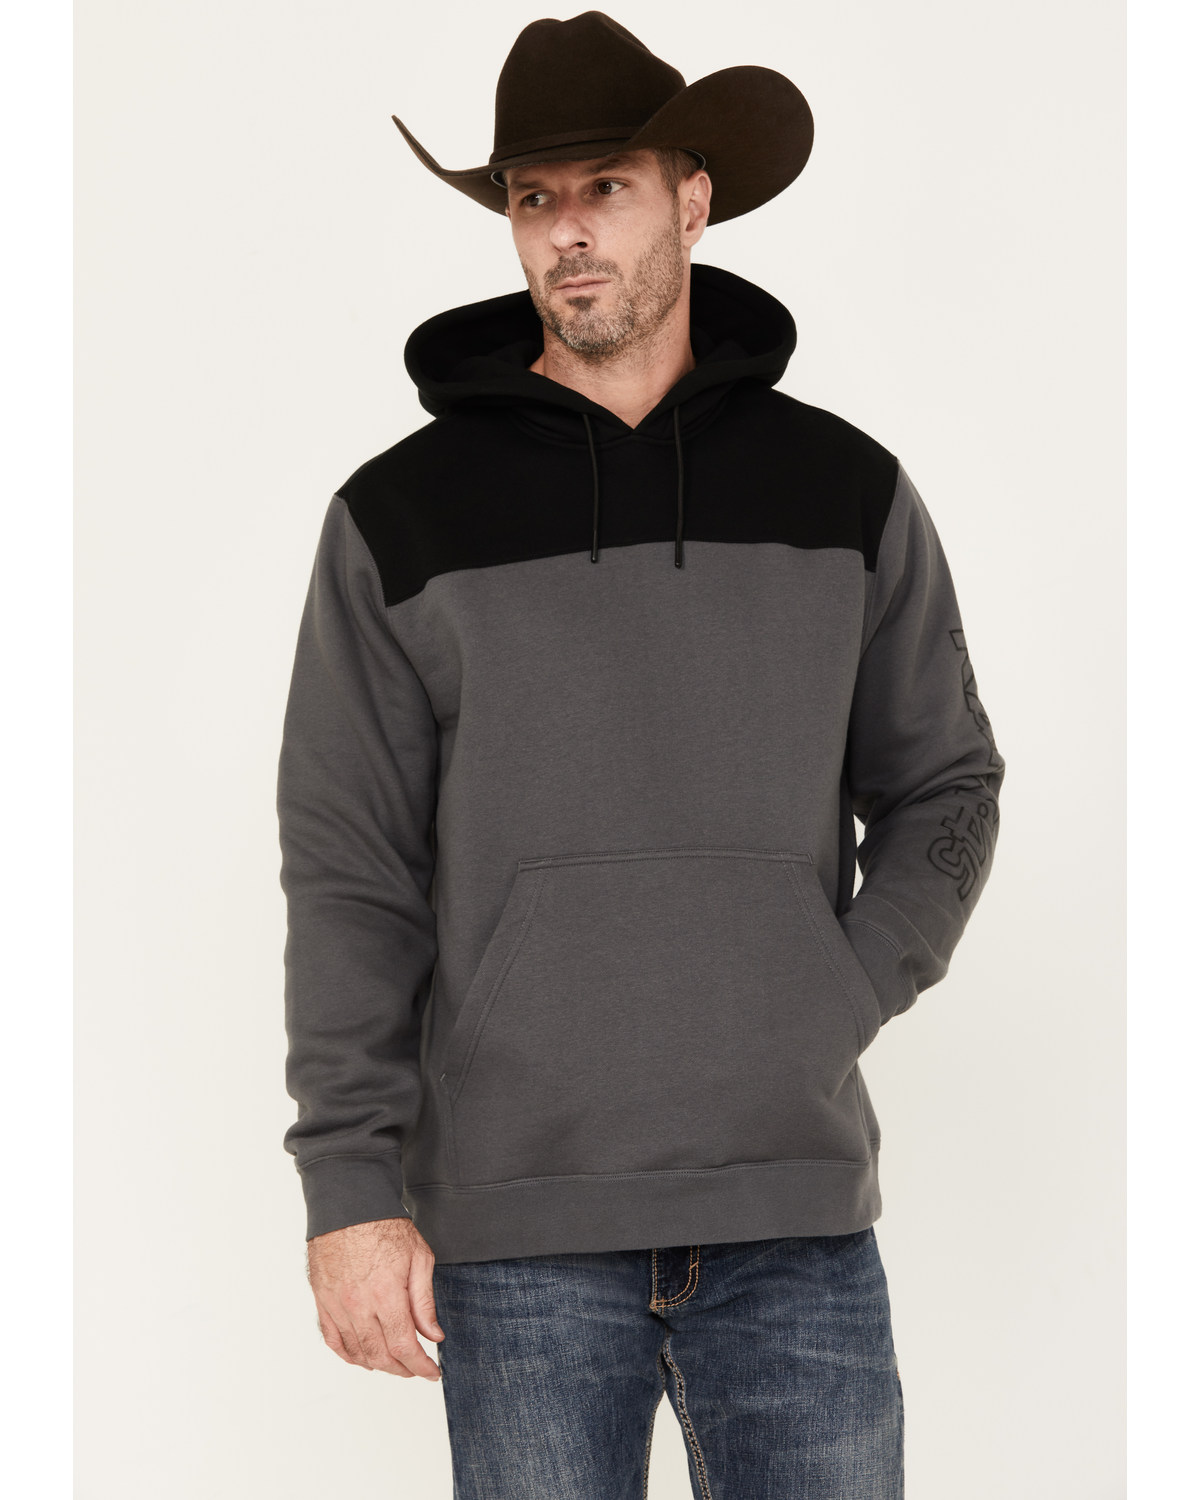 RANK 45® Men's Reflective Sleeve Hooded Sweatshirt